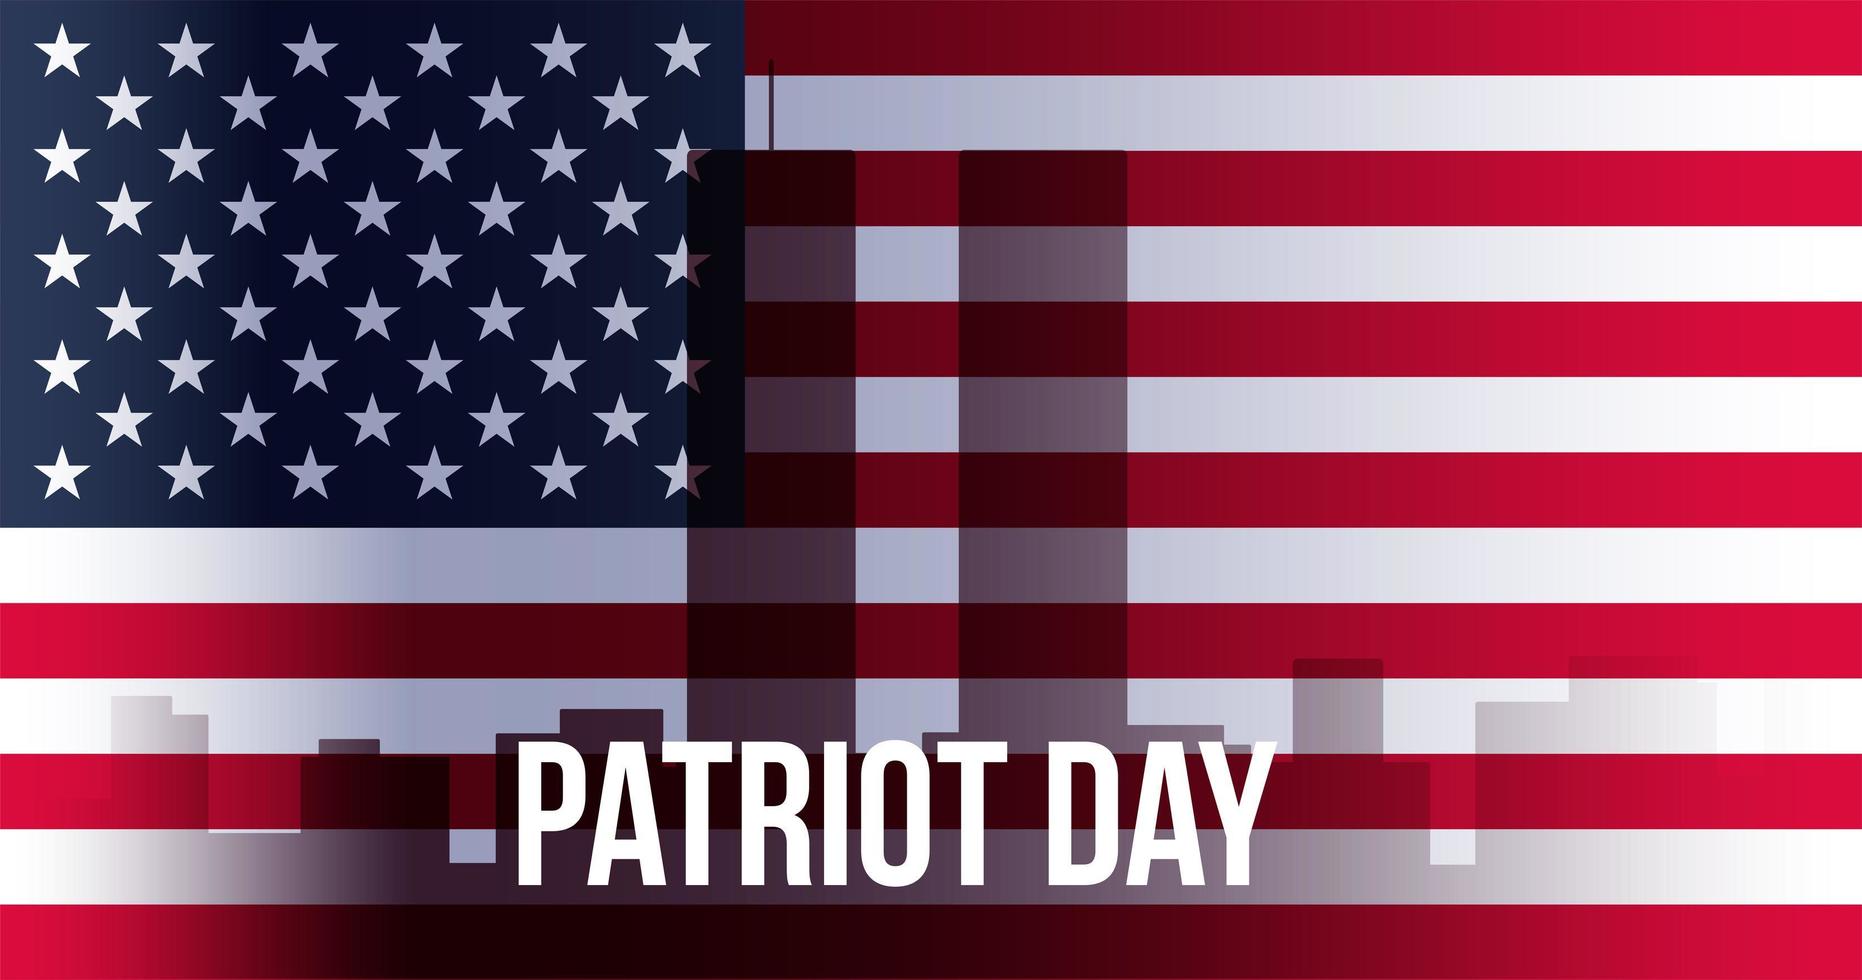 Patriot Day Banner vector